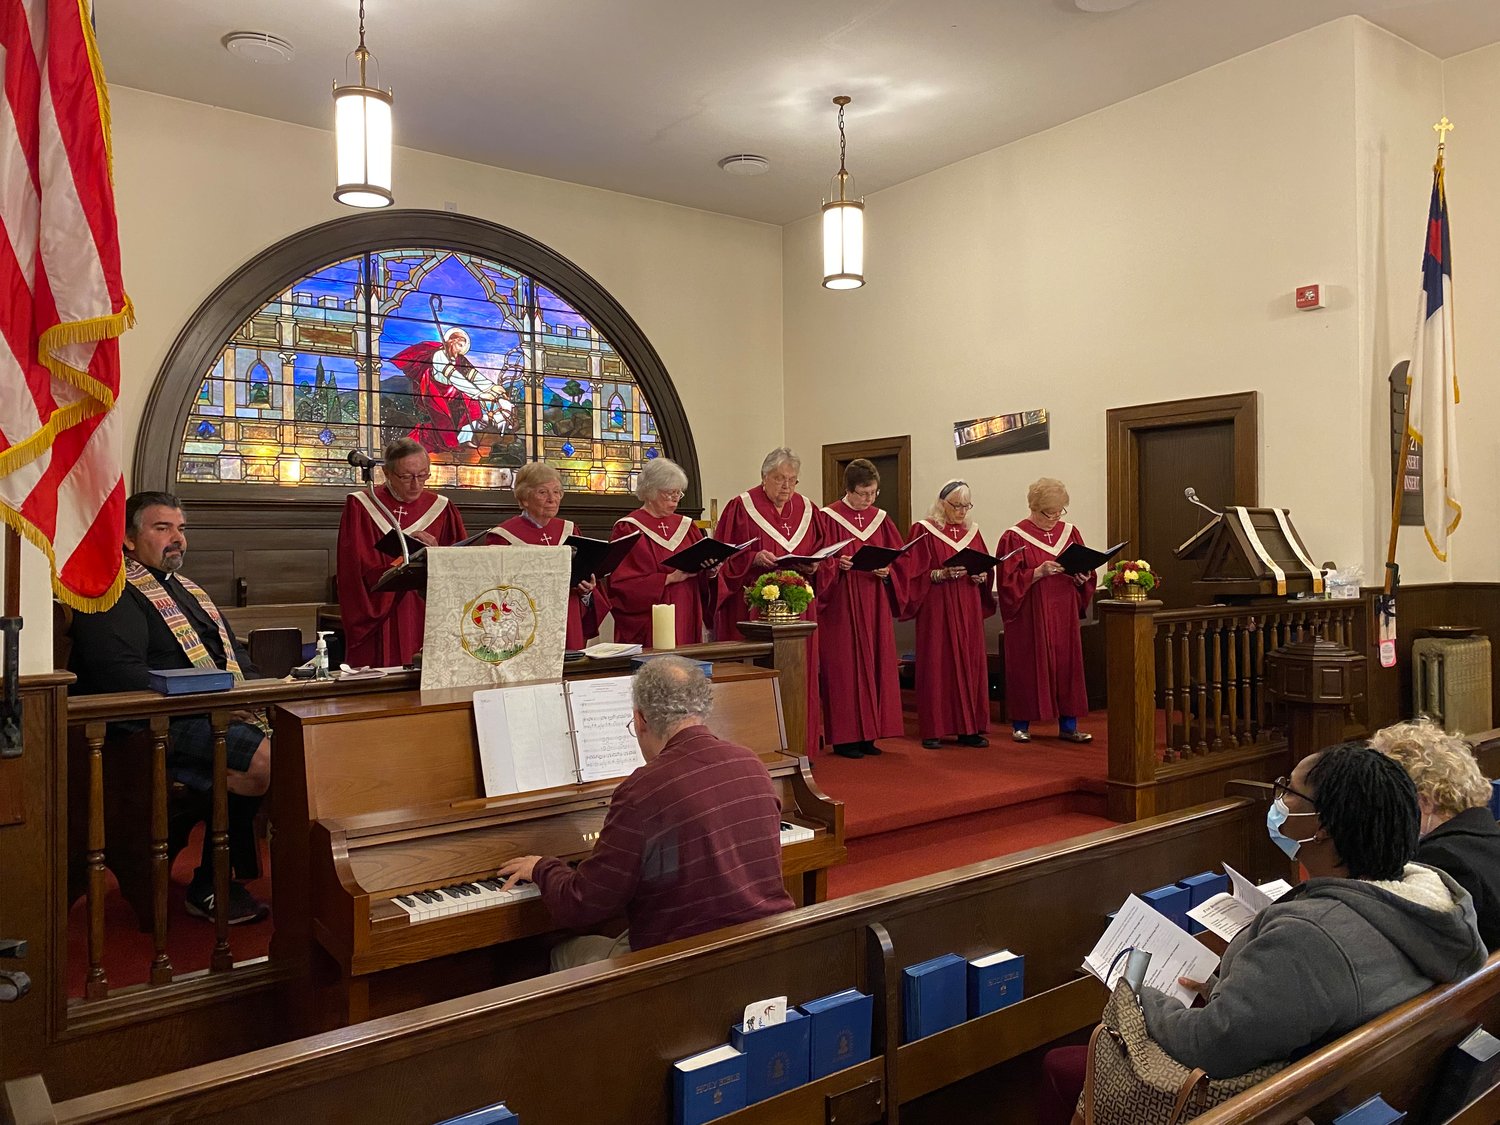 The choir serenades the crowd during the anniversary church service.